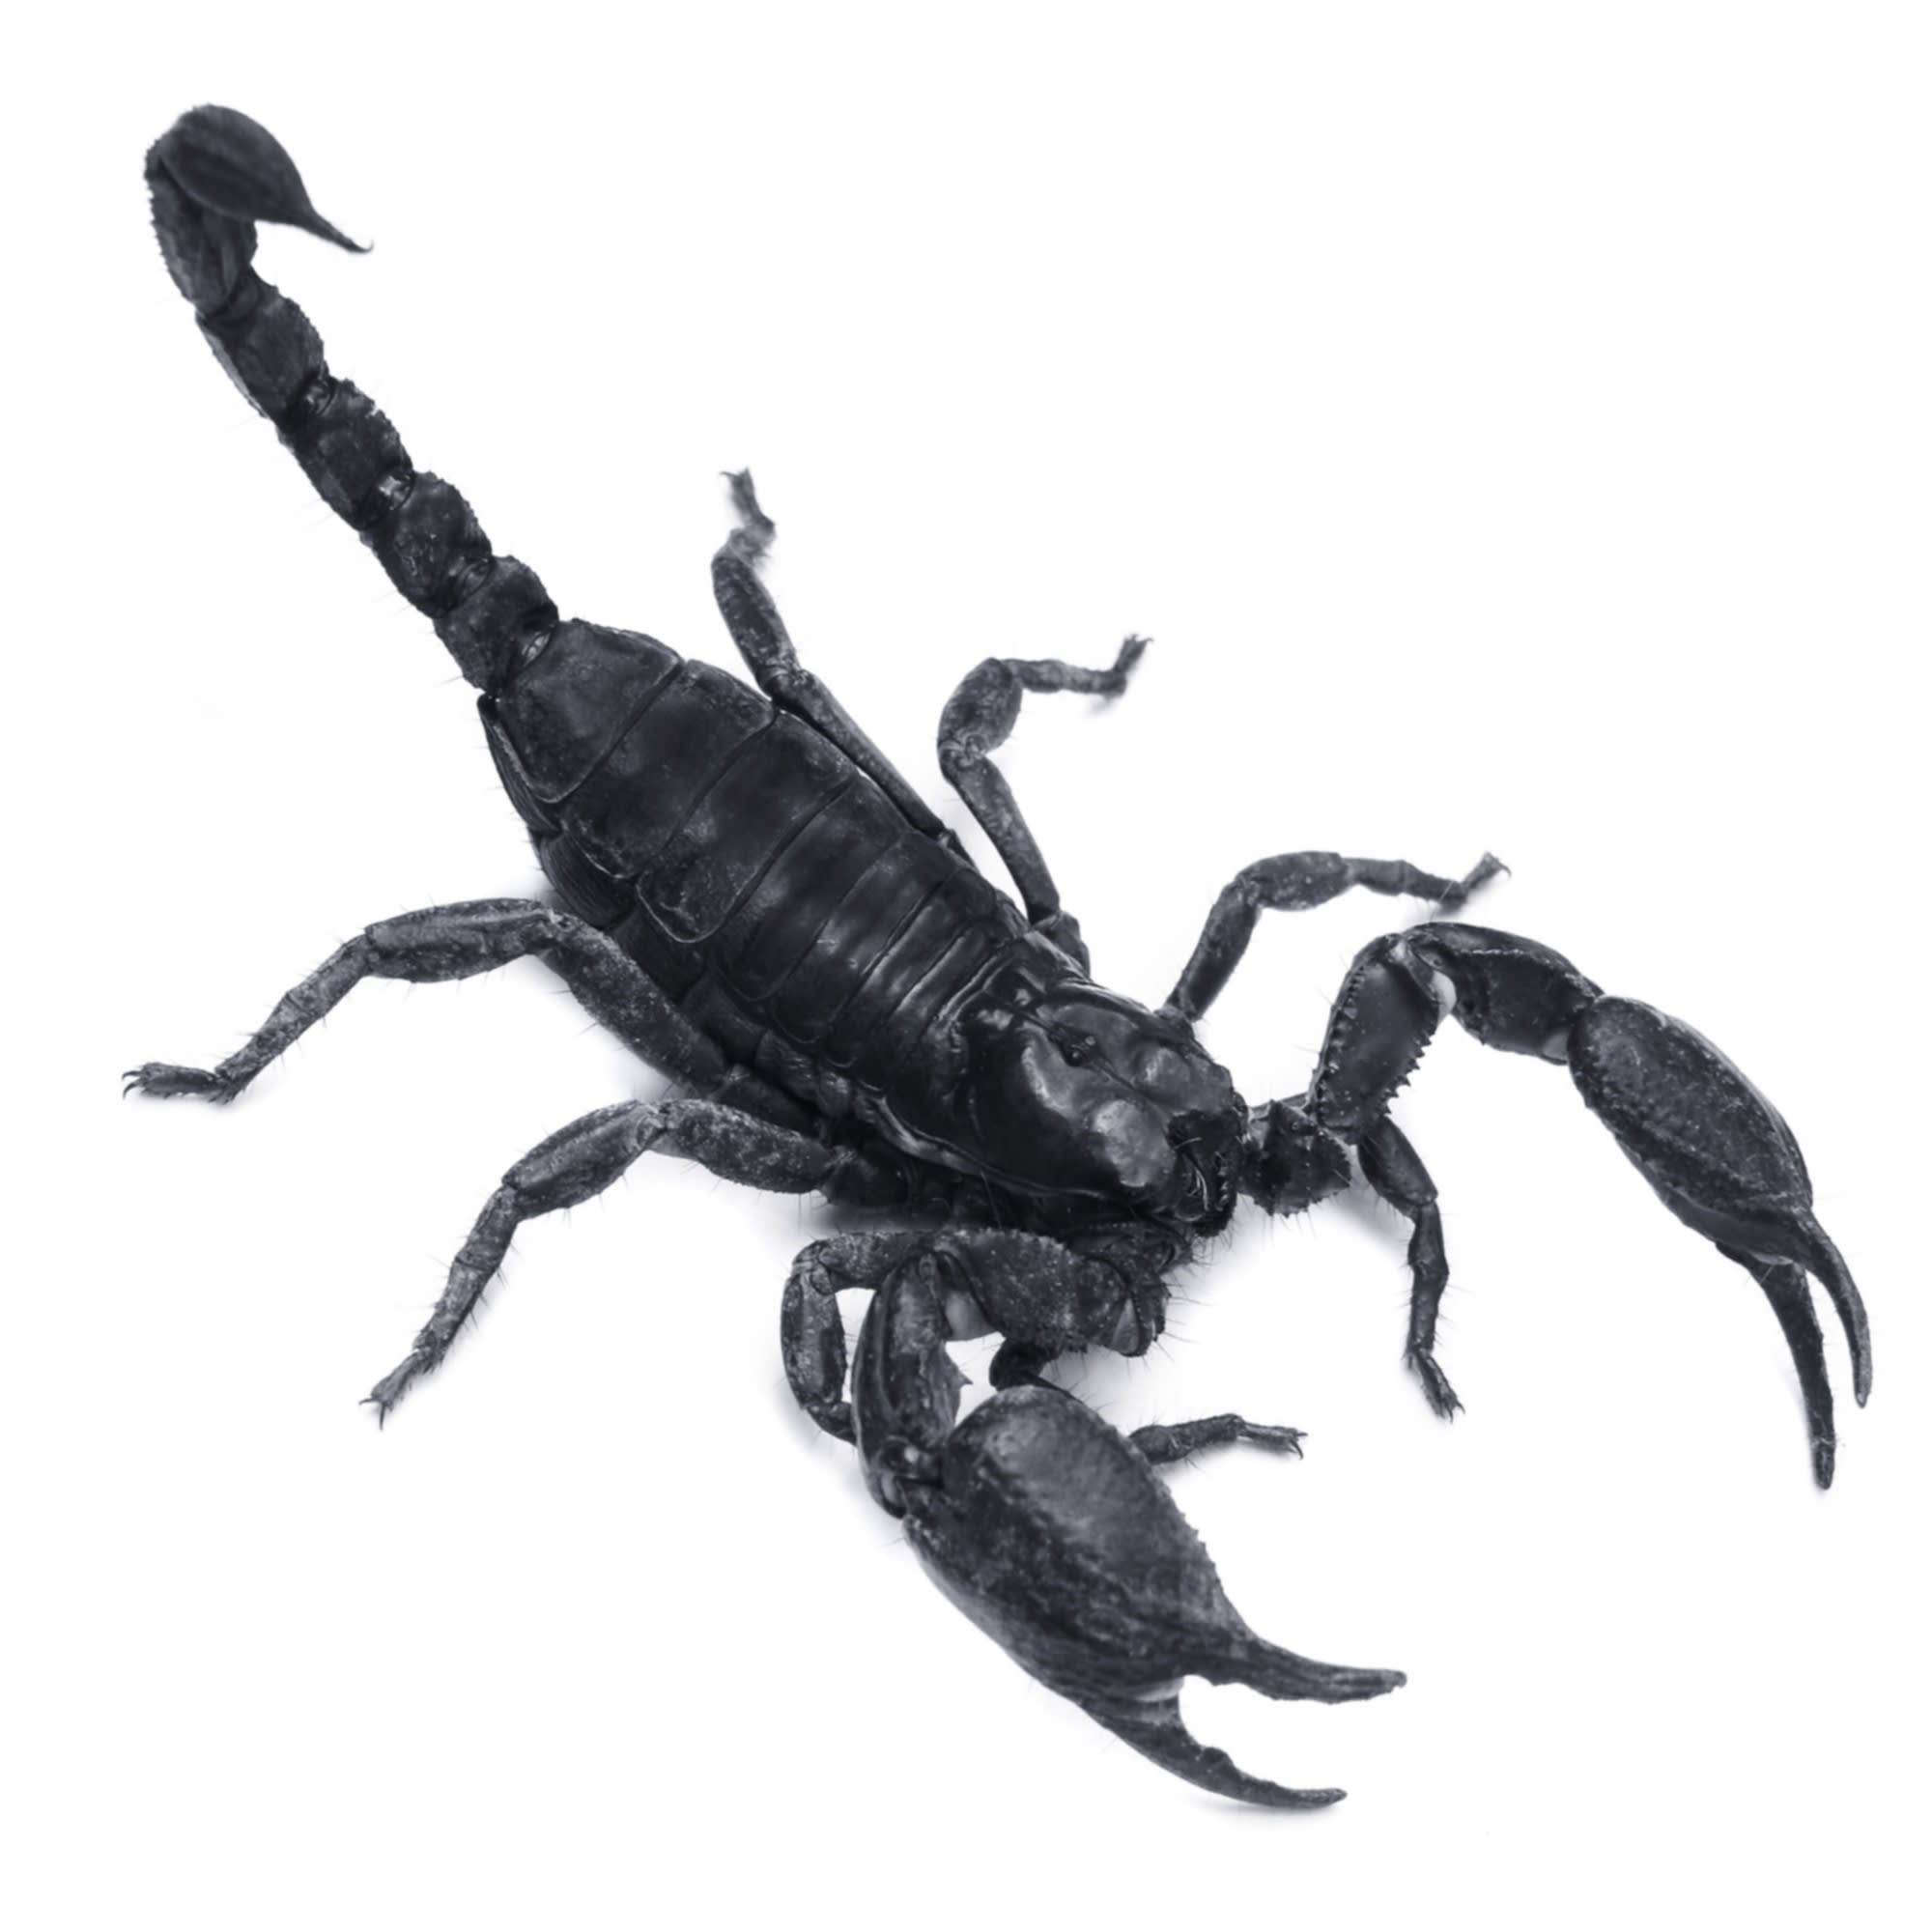 Sawfinger scorpion